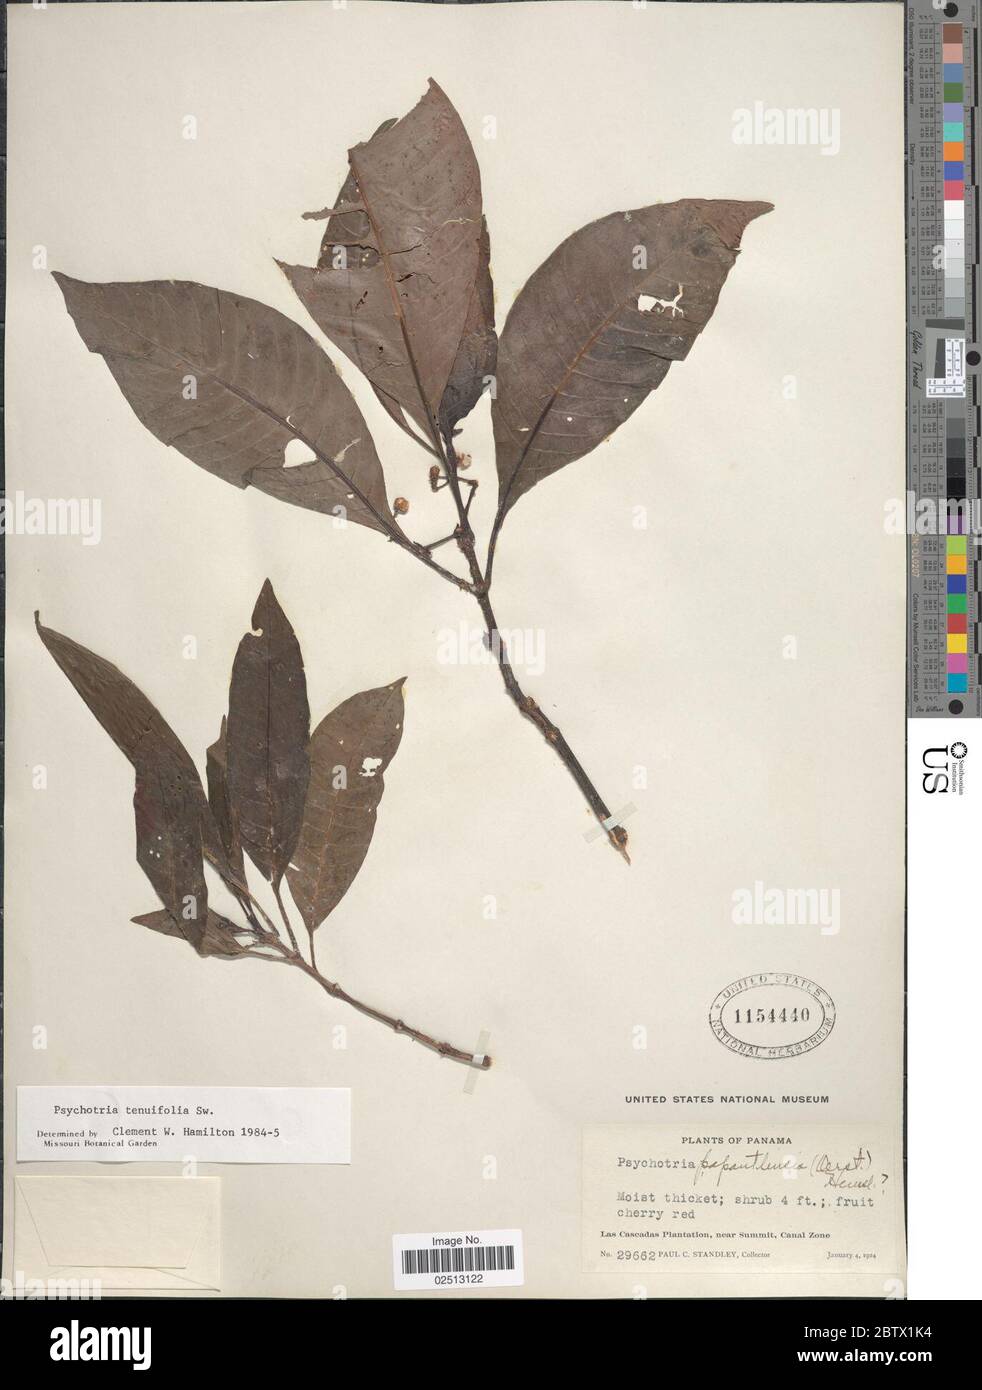 Psychotria tenuifolia Sw. Stock Photo